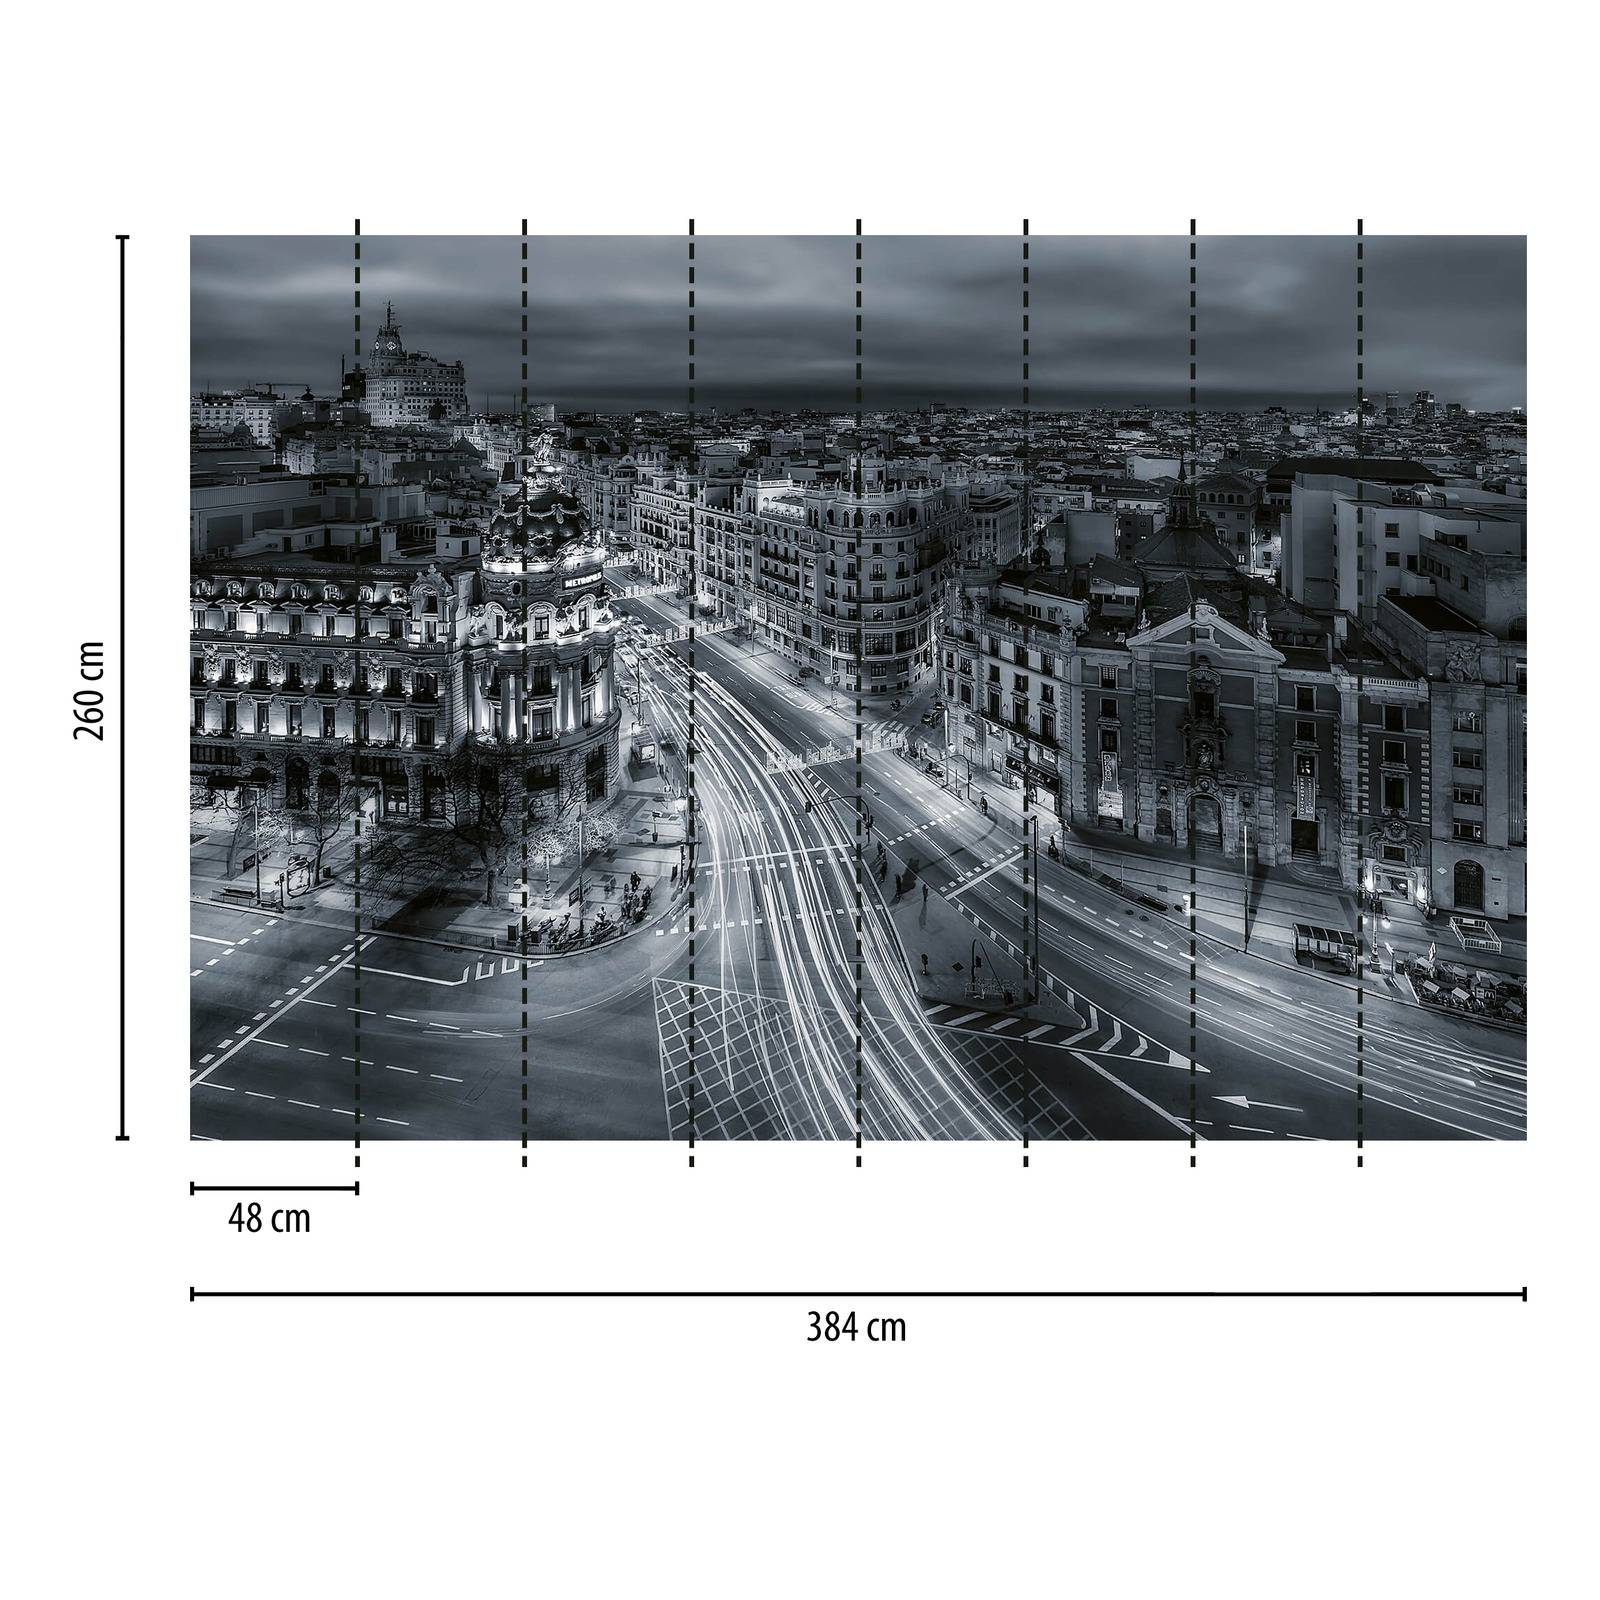             Fototapete Stadt Madrid – Grau, Weiß, Schwarz
        